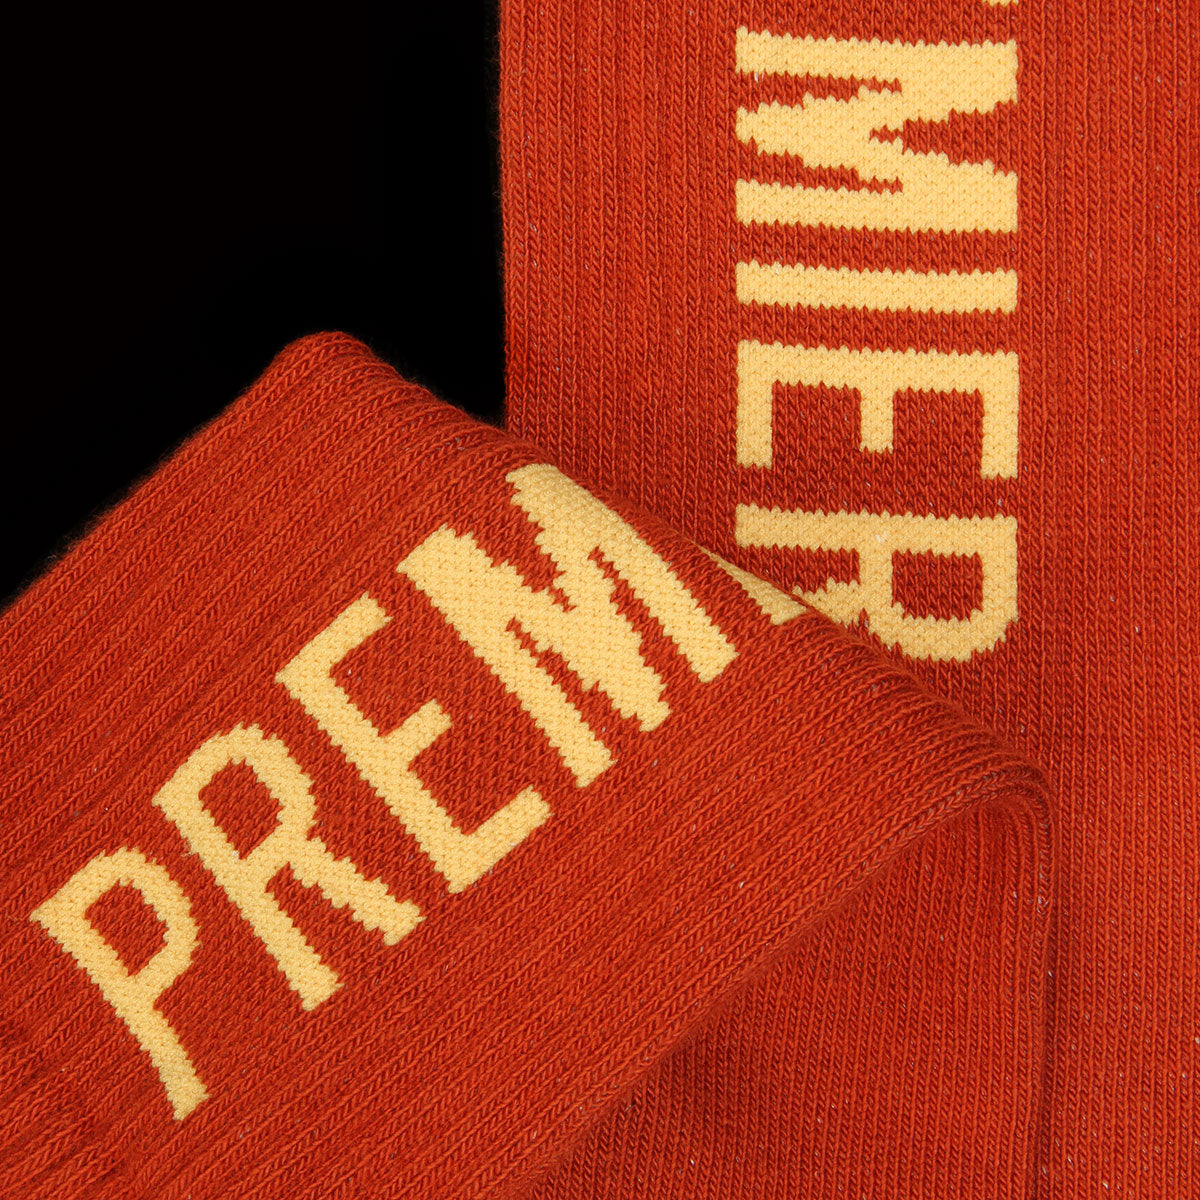 Premier Big Logo Crew Sock Orange